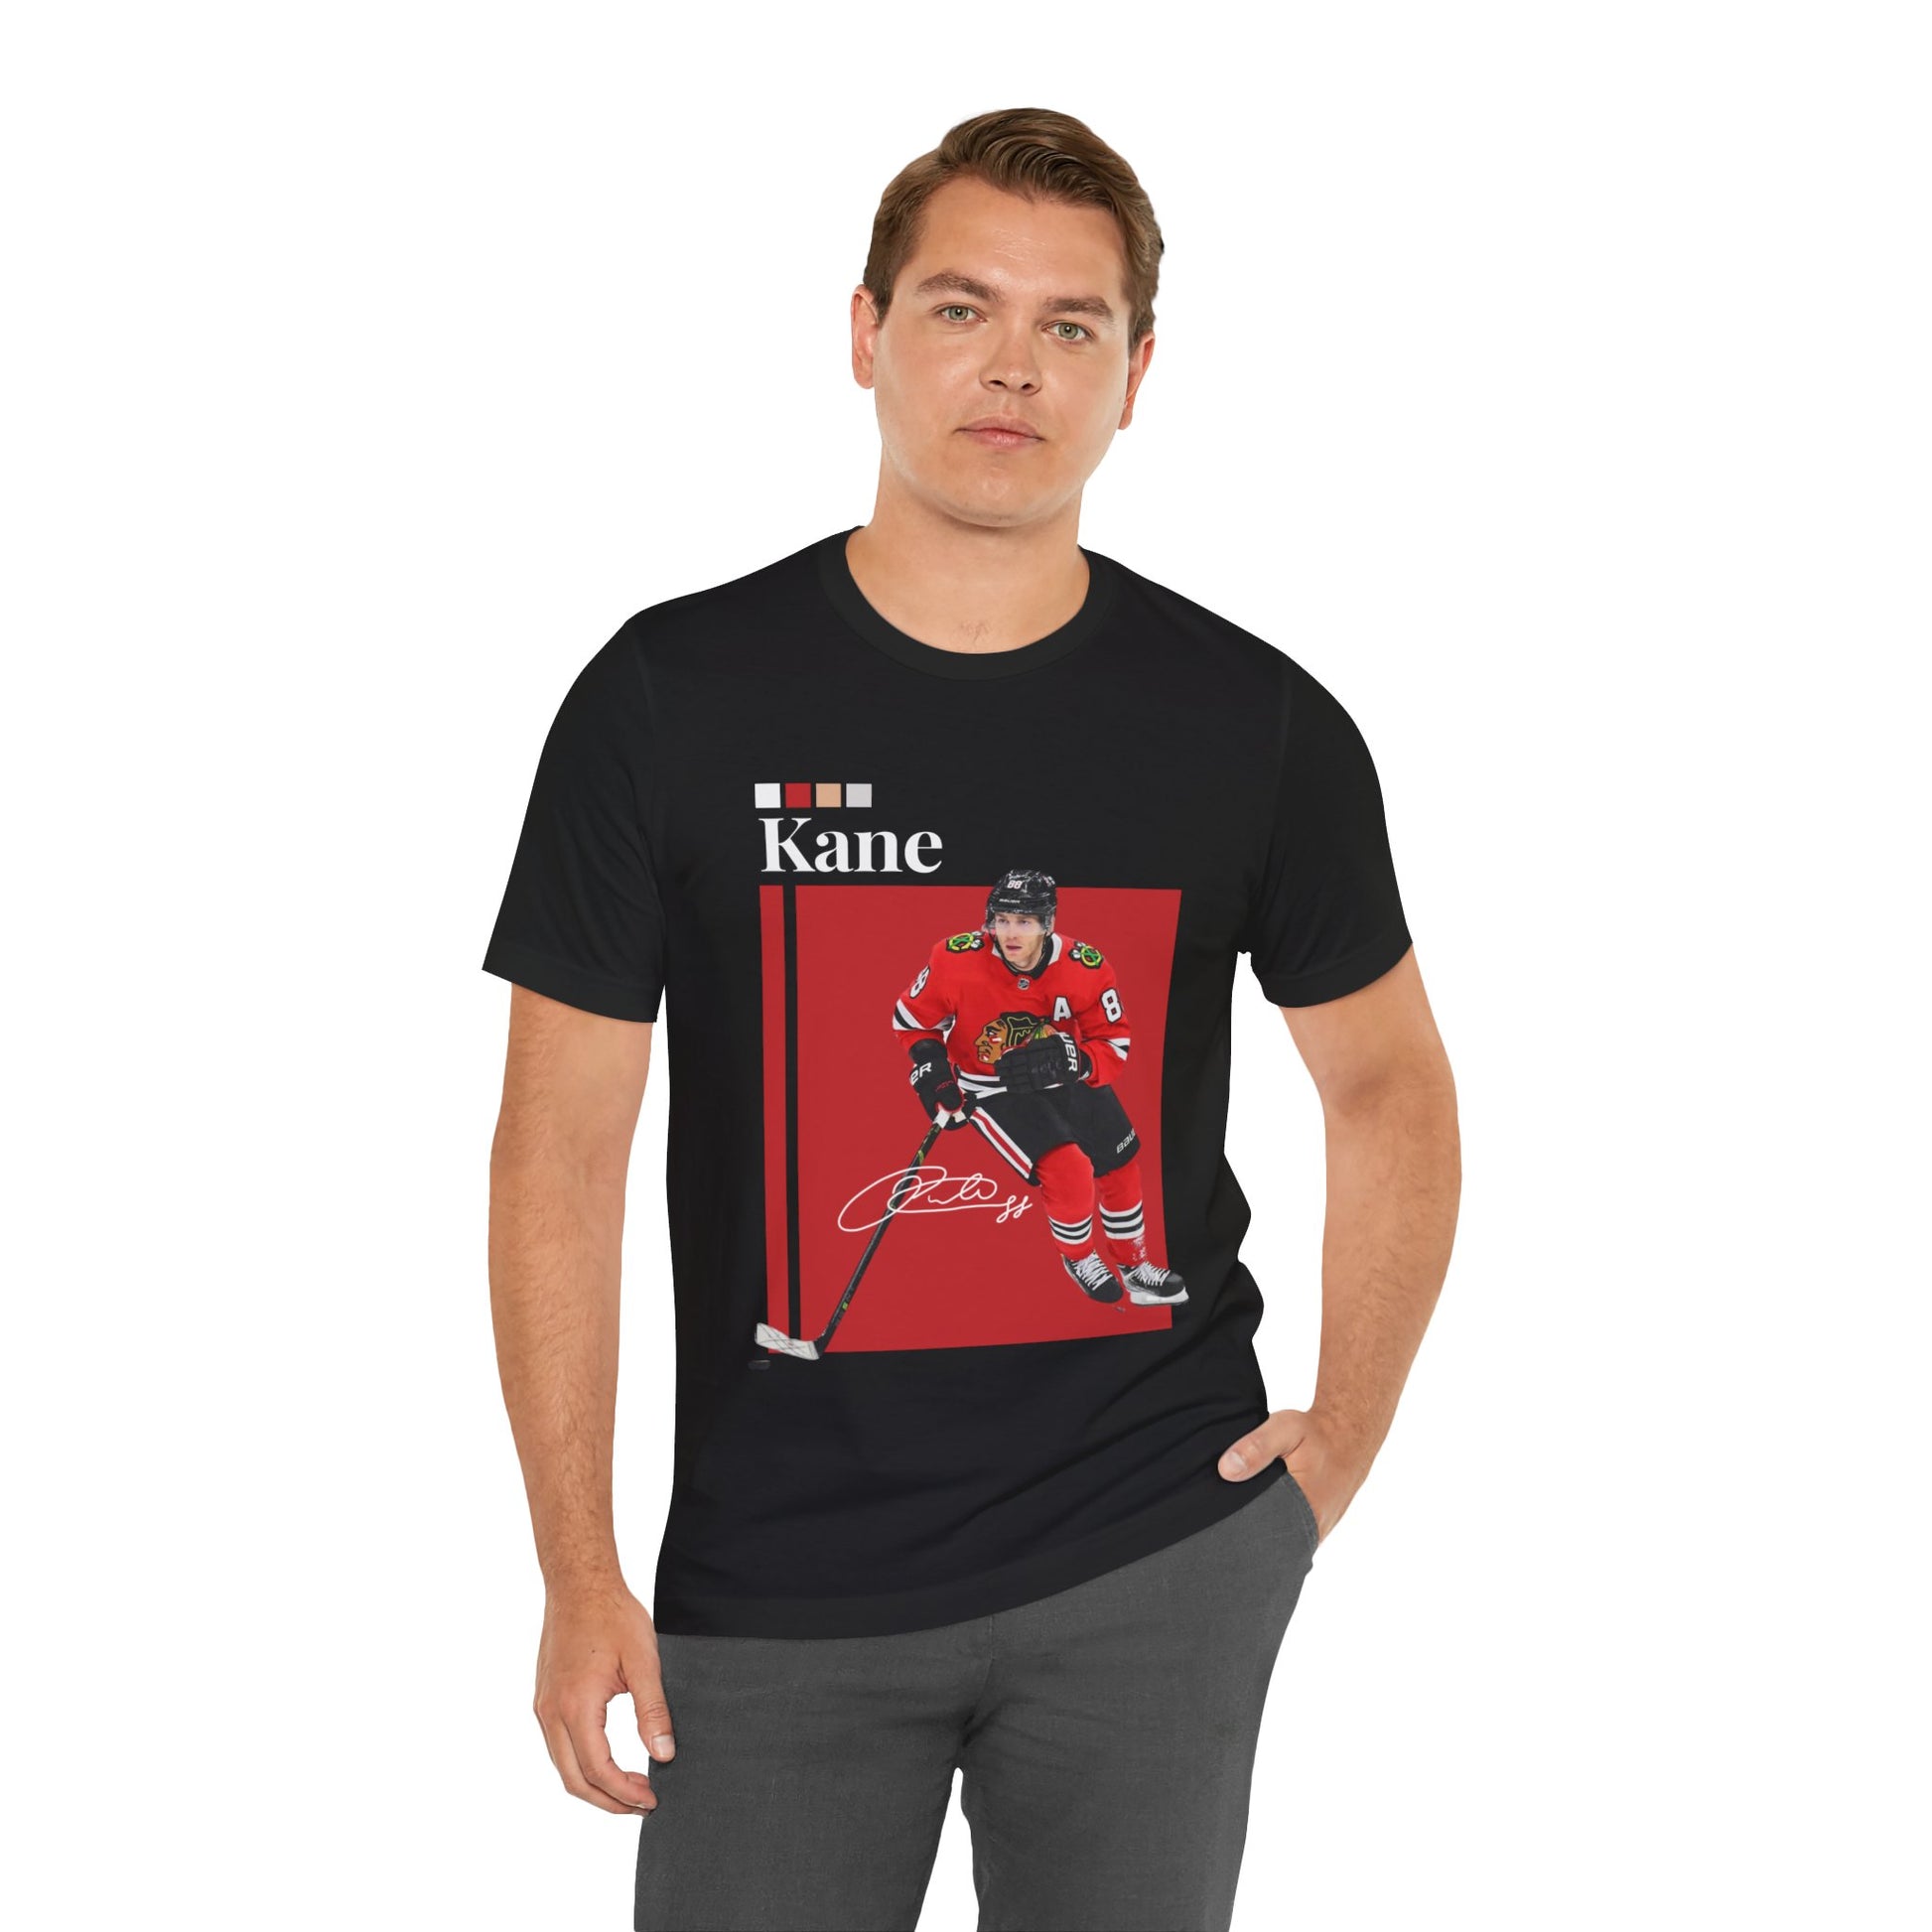 NHL All-Star Patrick Kane Graphic T-Shirt mens tee